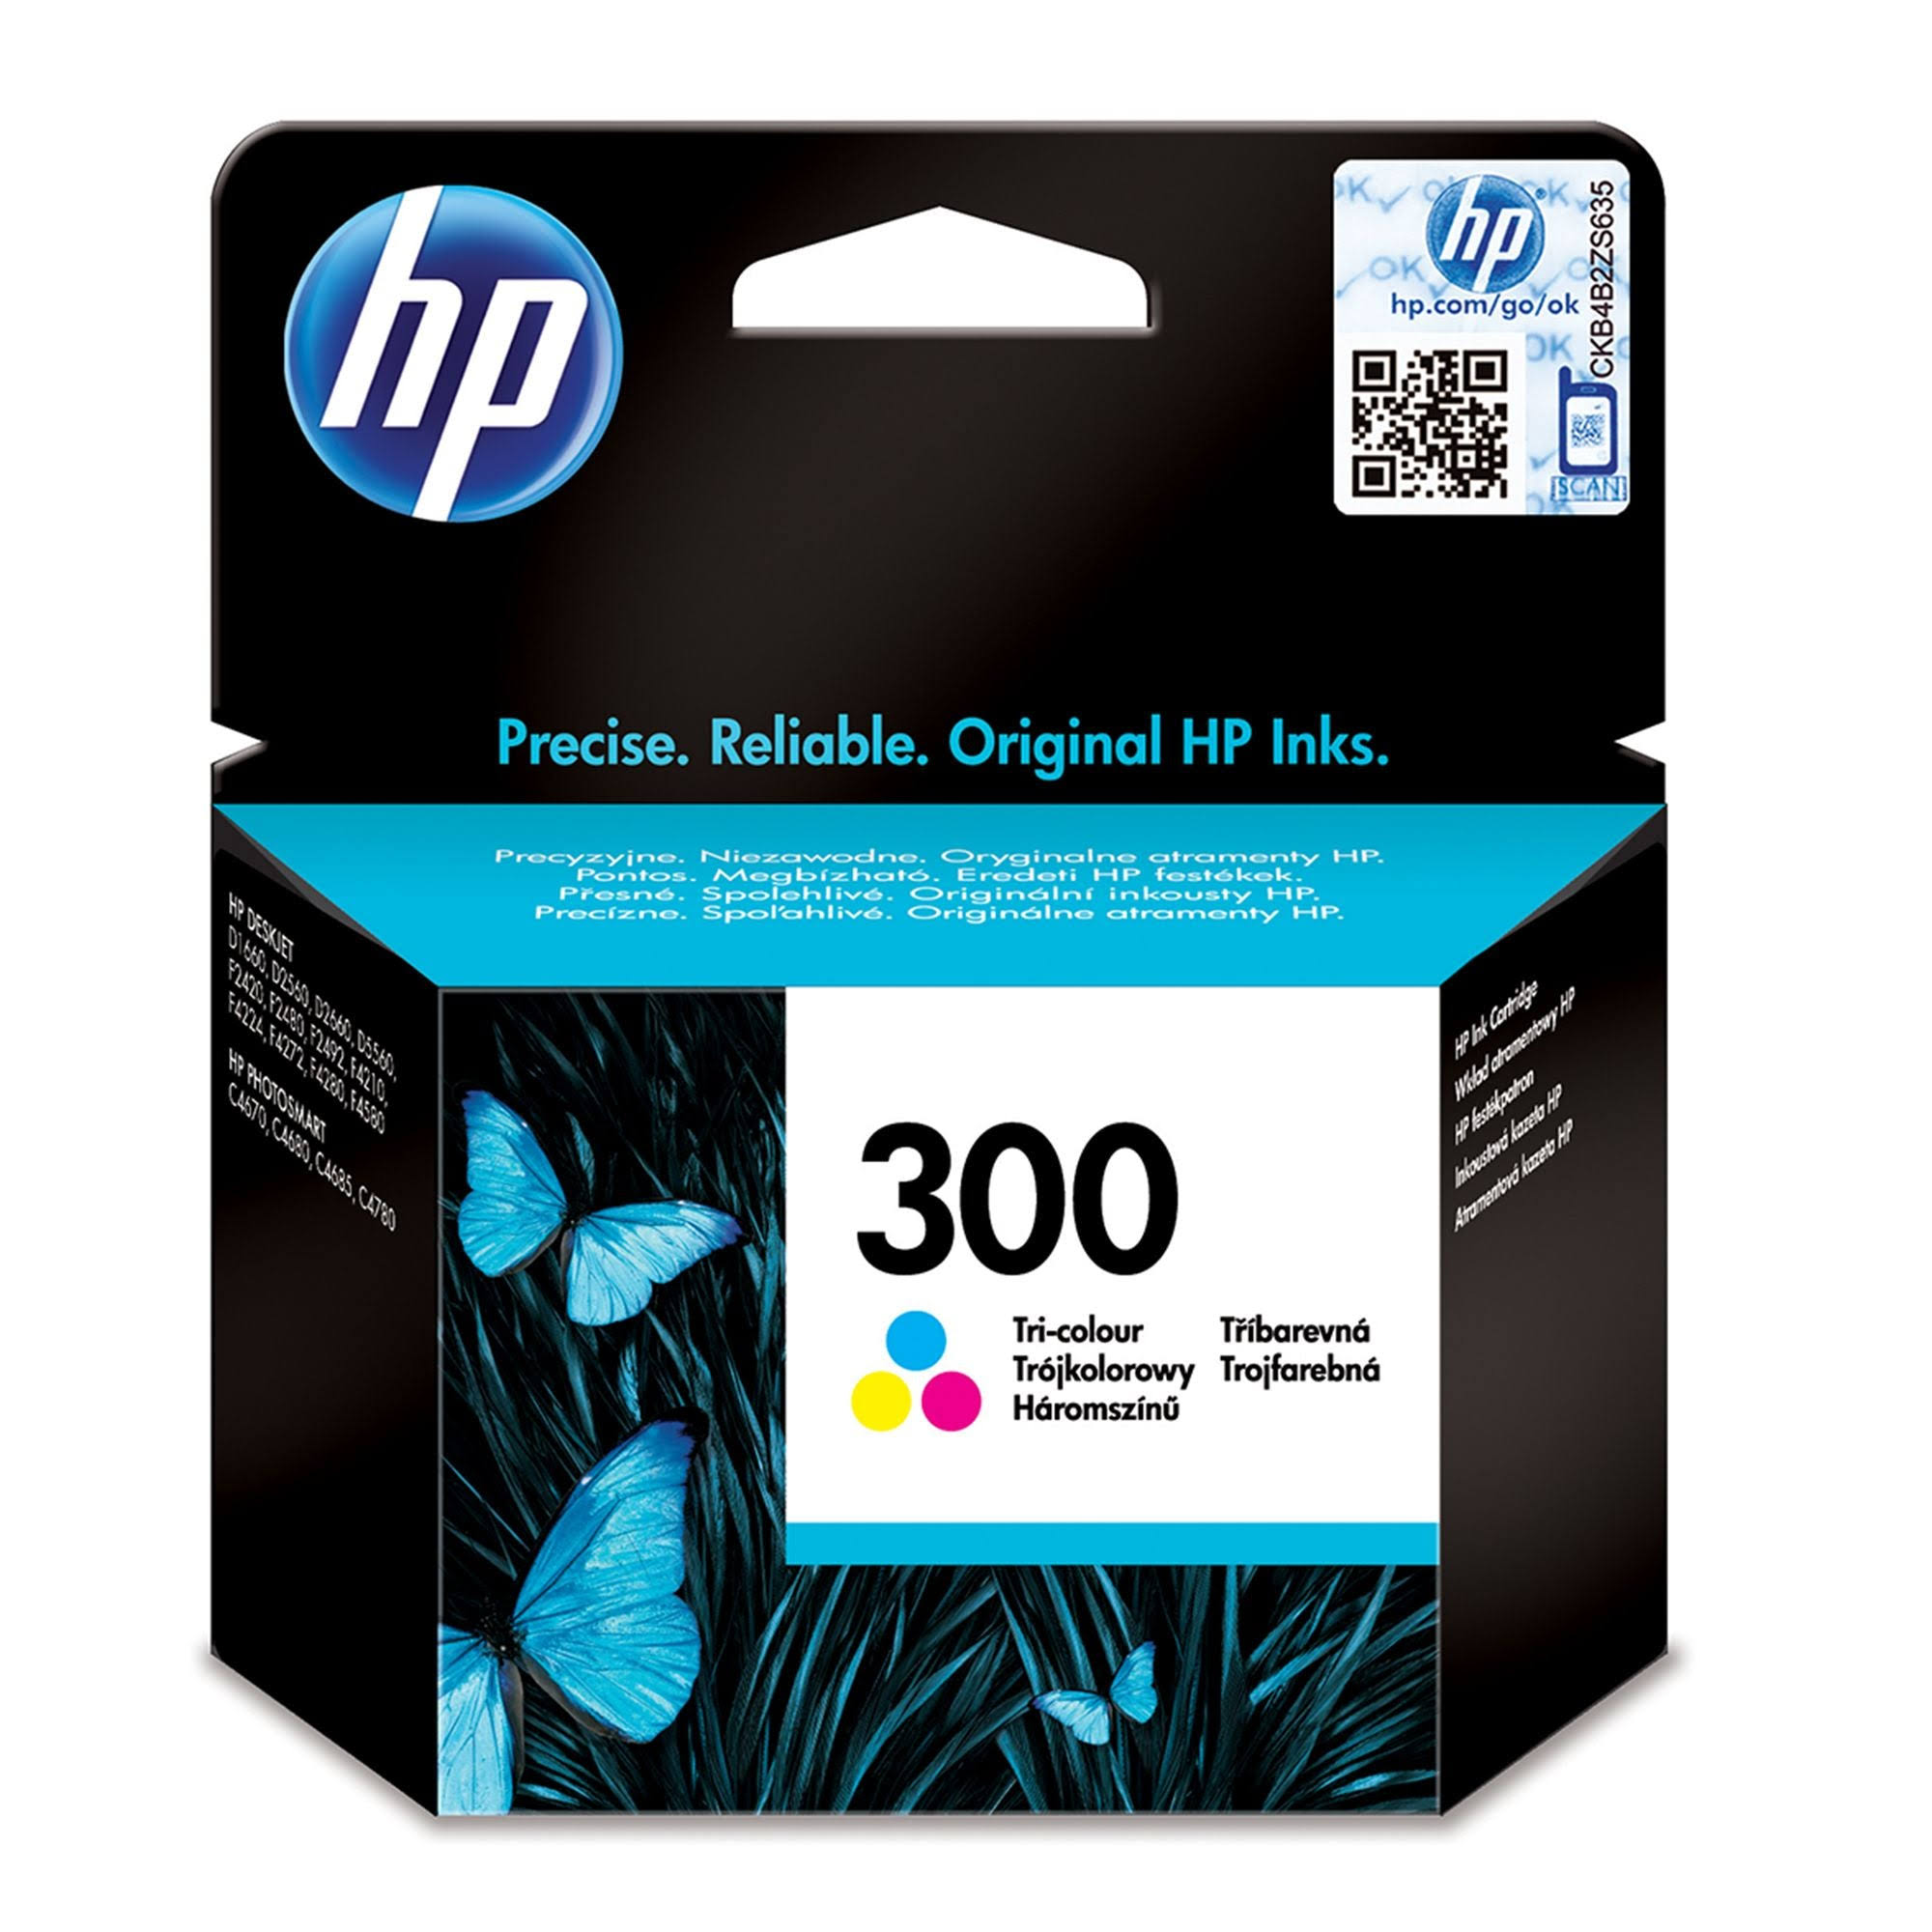 HP Printer Ink Cartridge - 300, Colour (CMY)